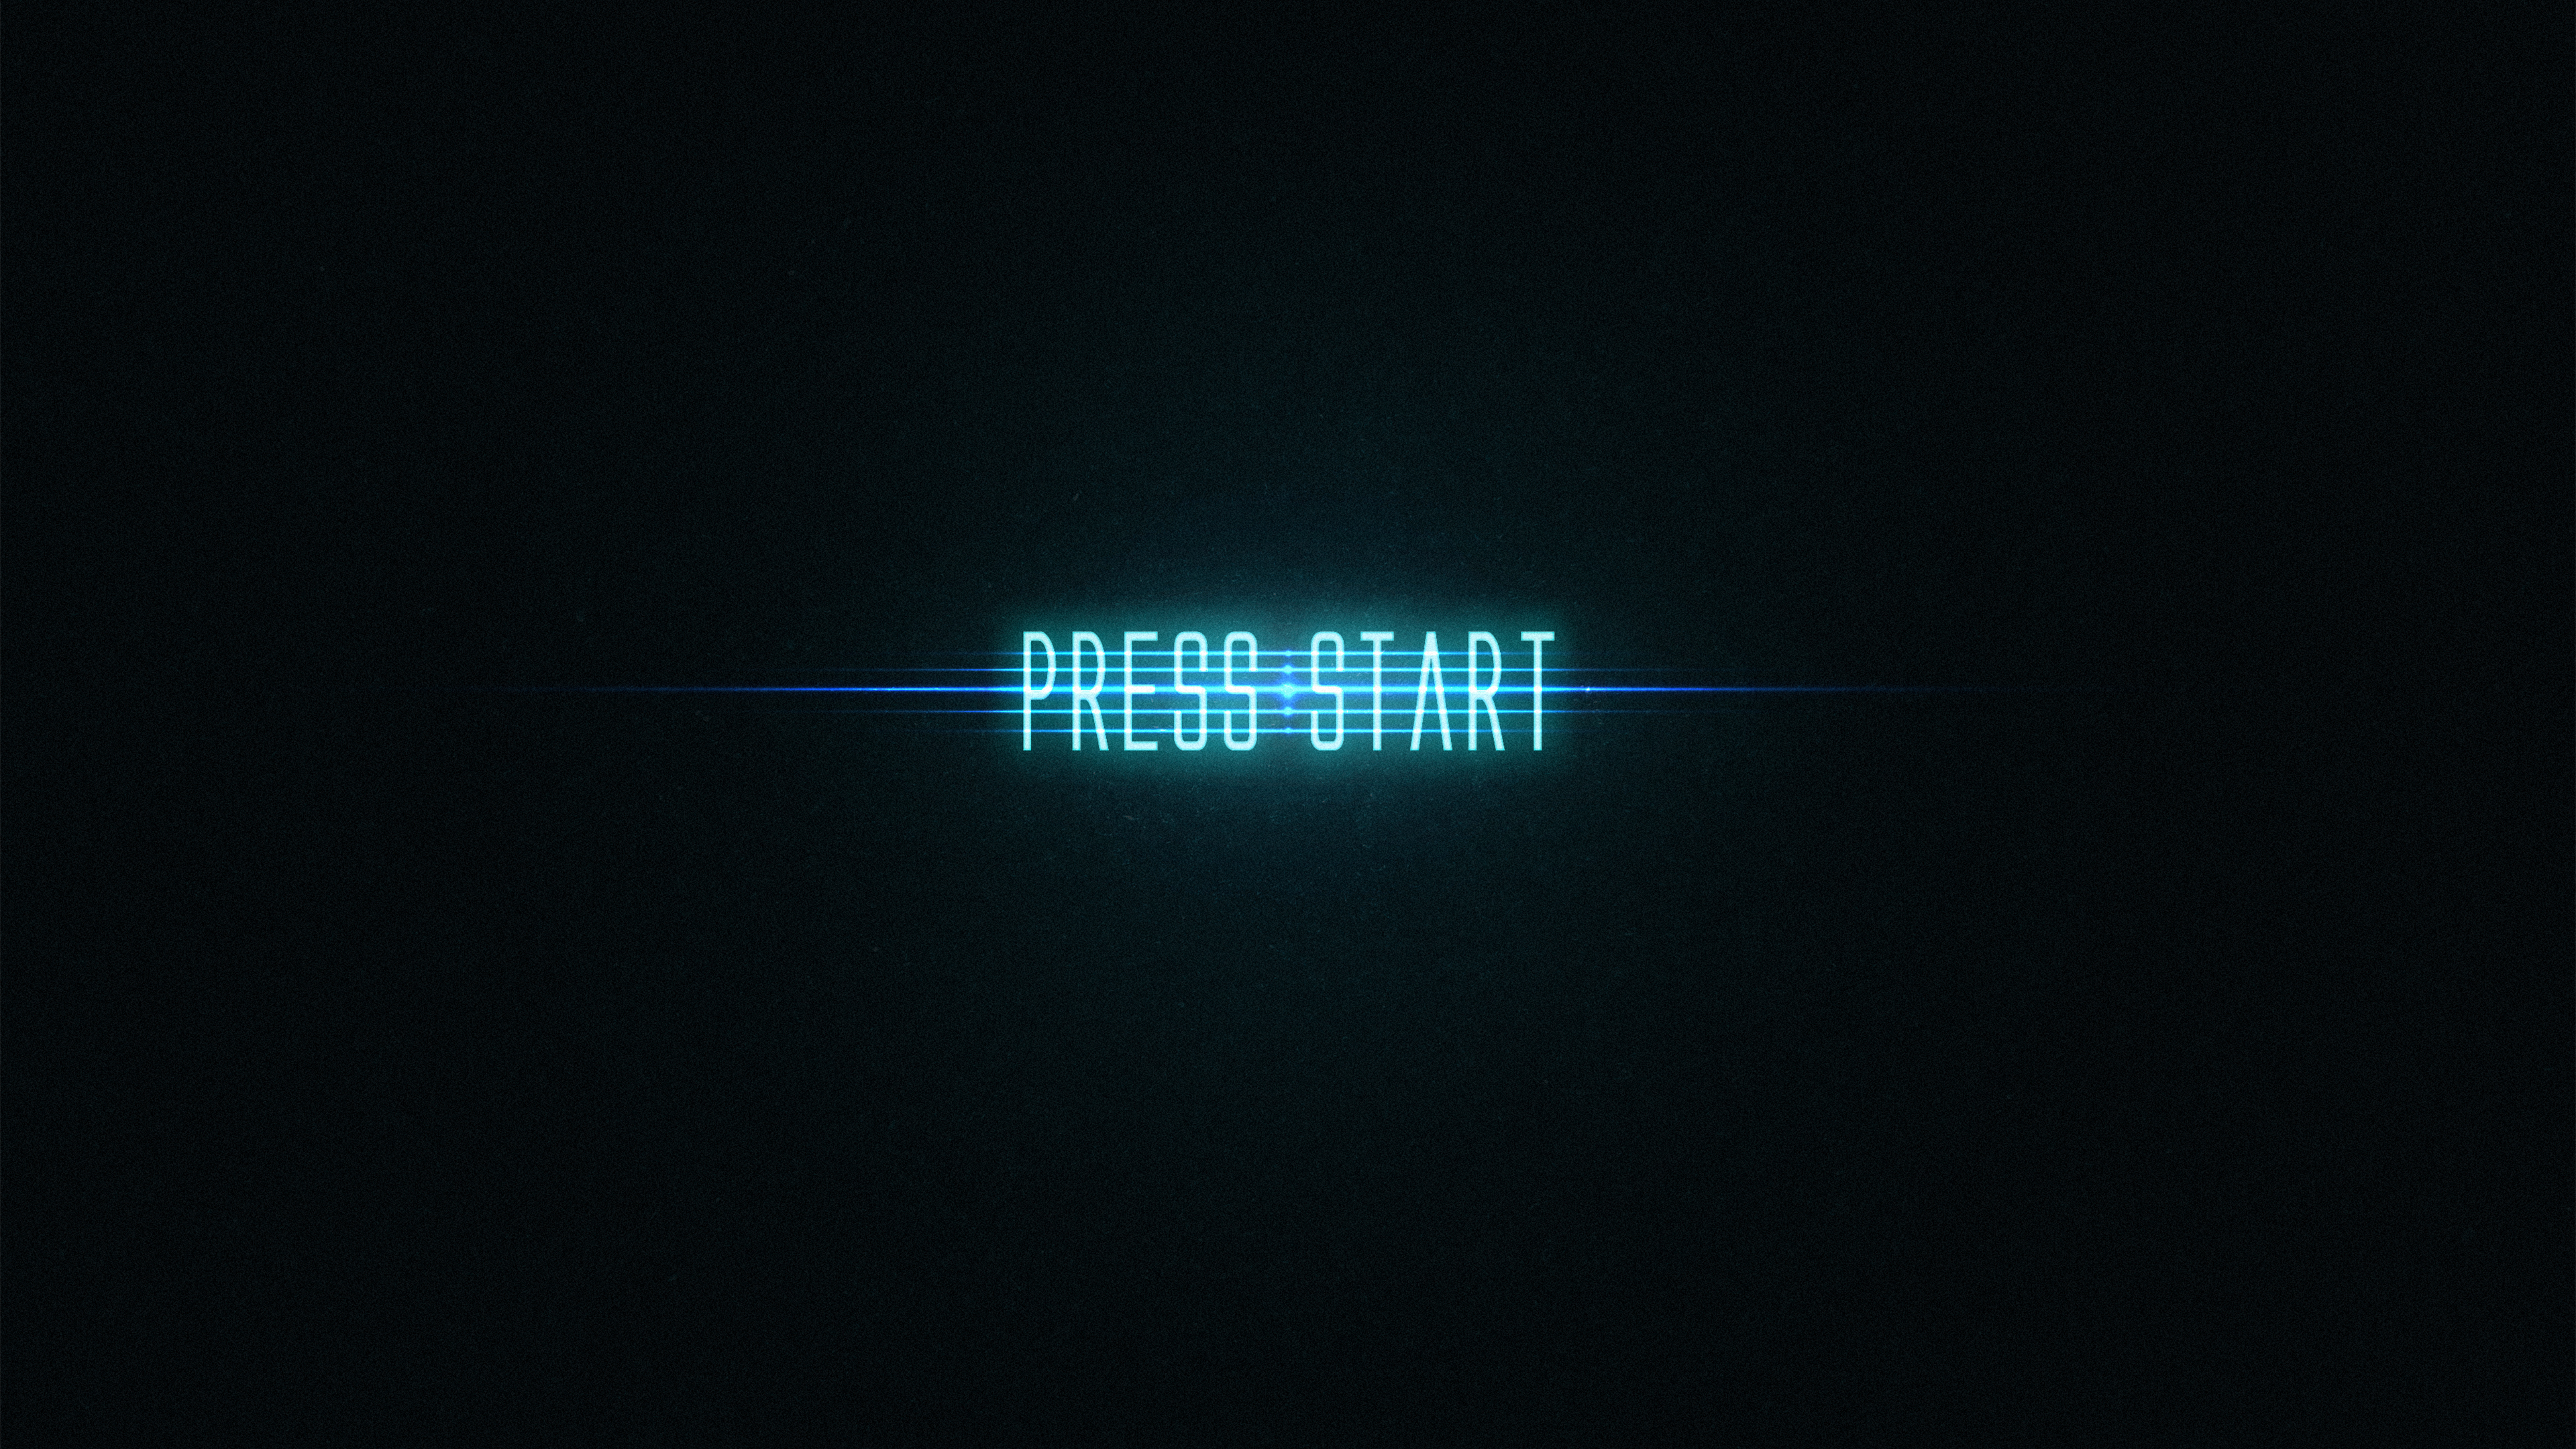 PRESS START Neon 4K